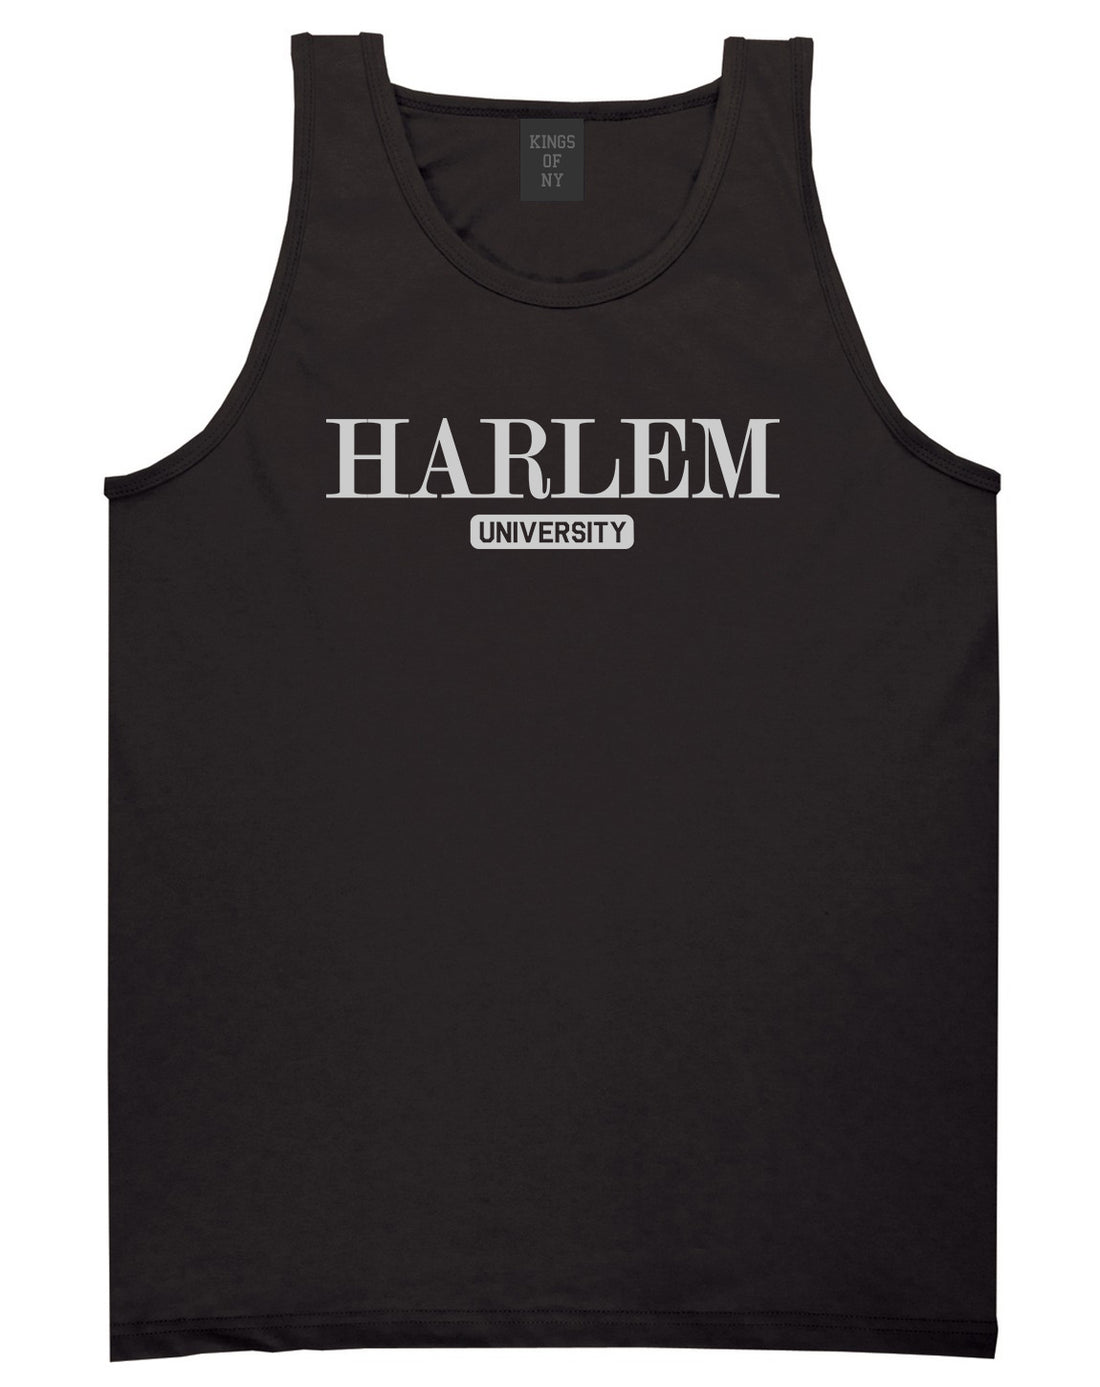 Harlem University New York Mens Tank Top T-Shirt Black